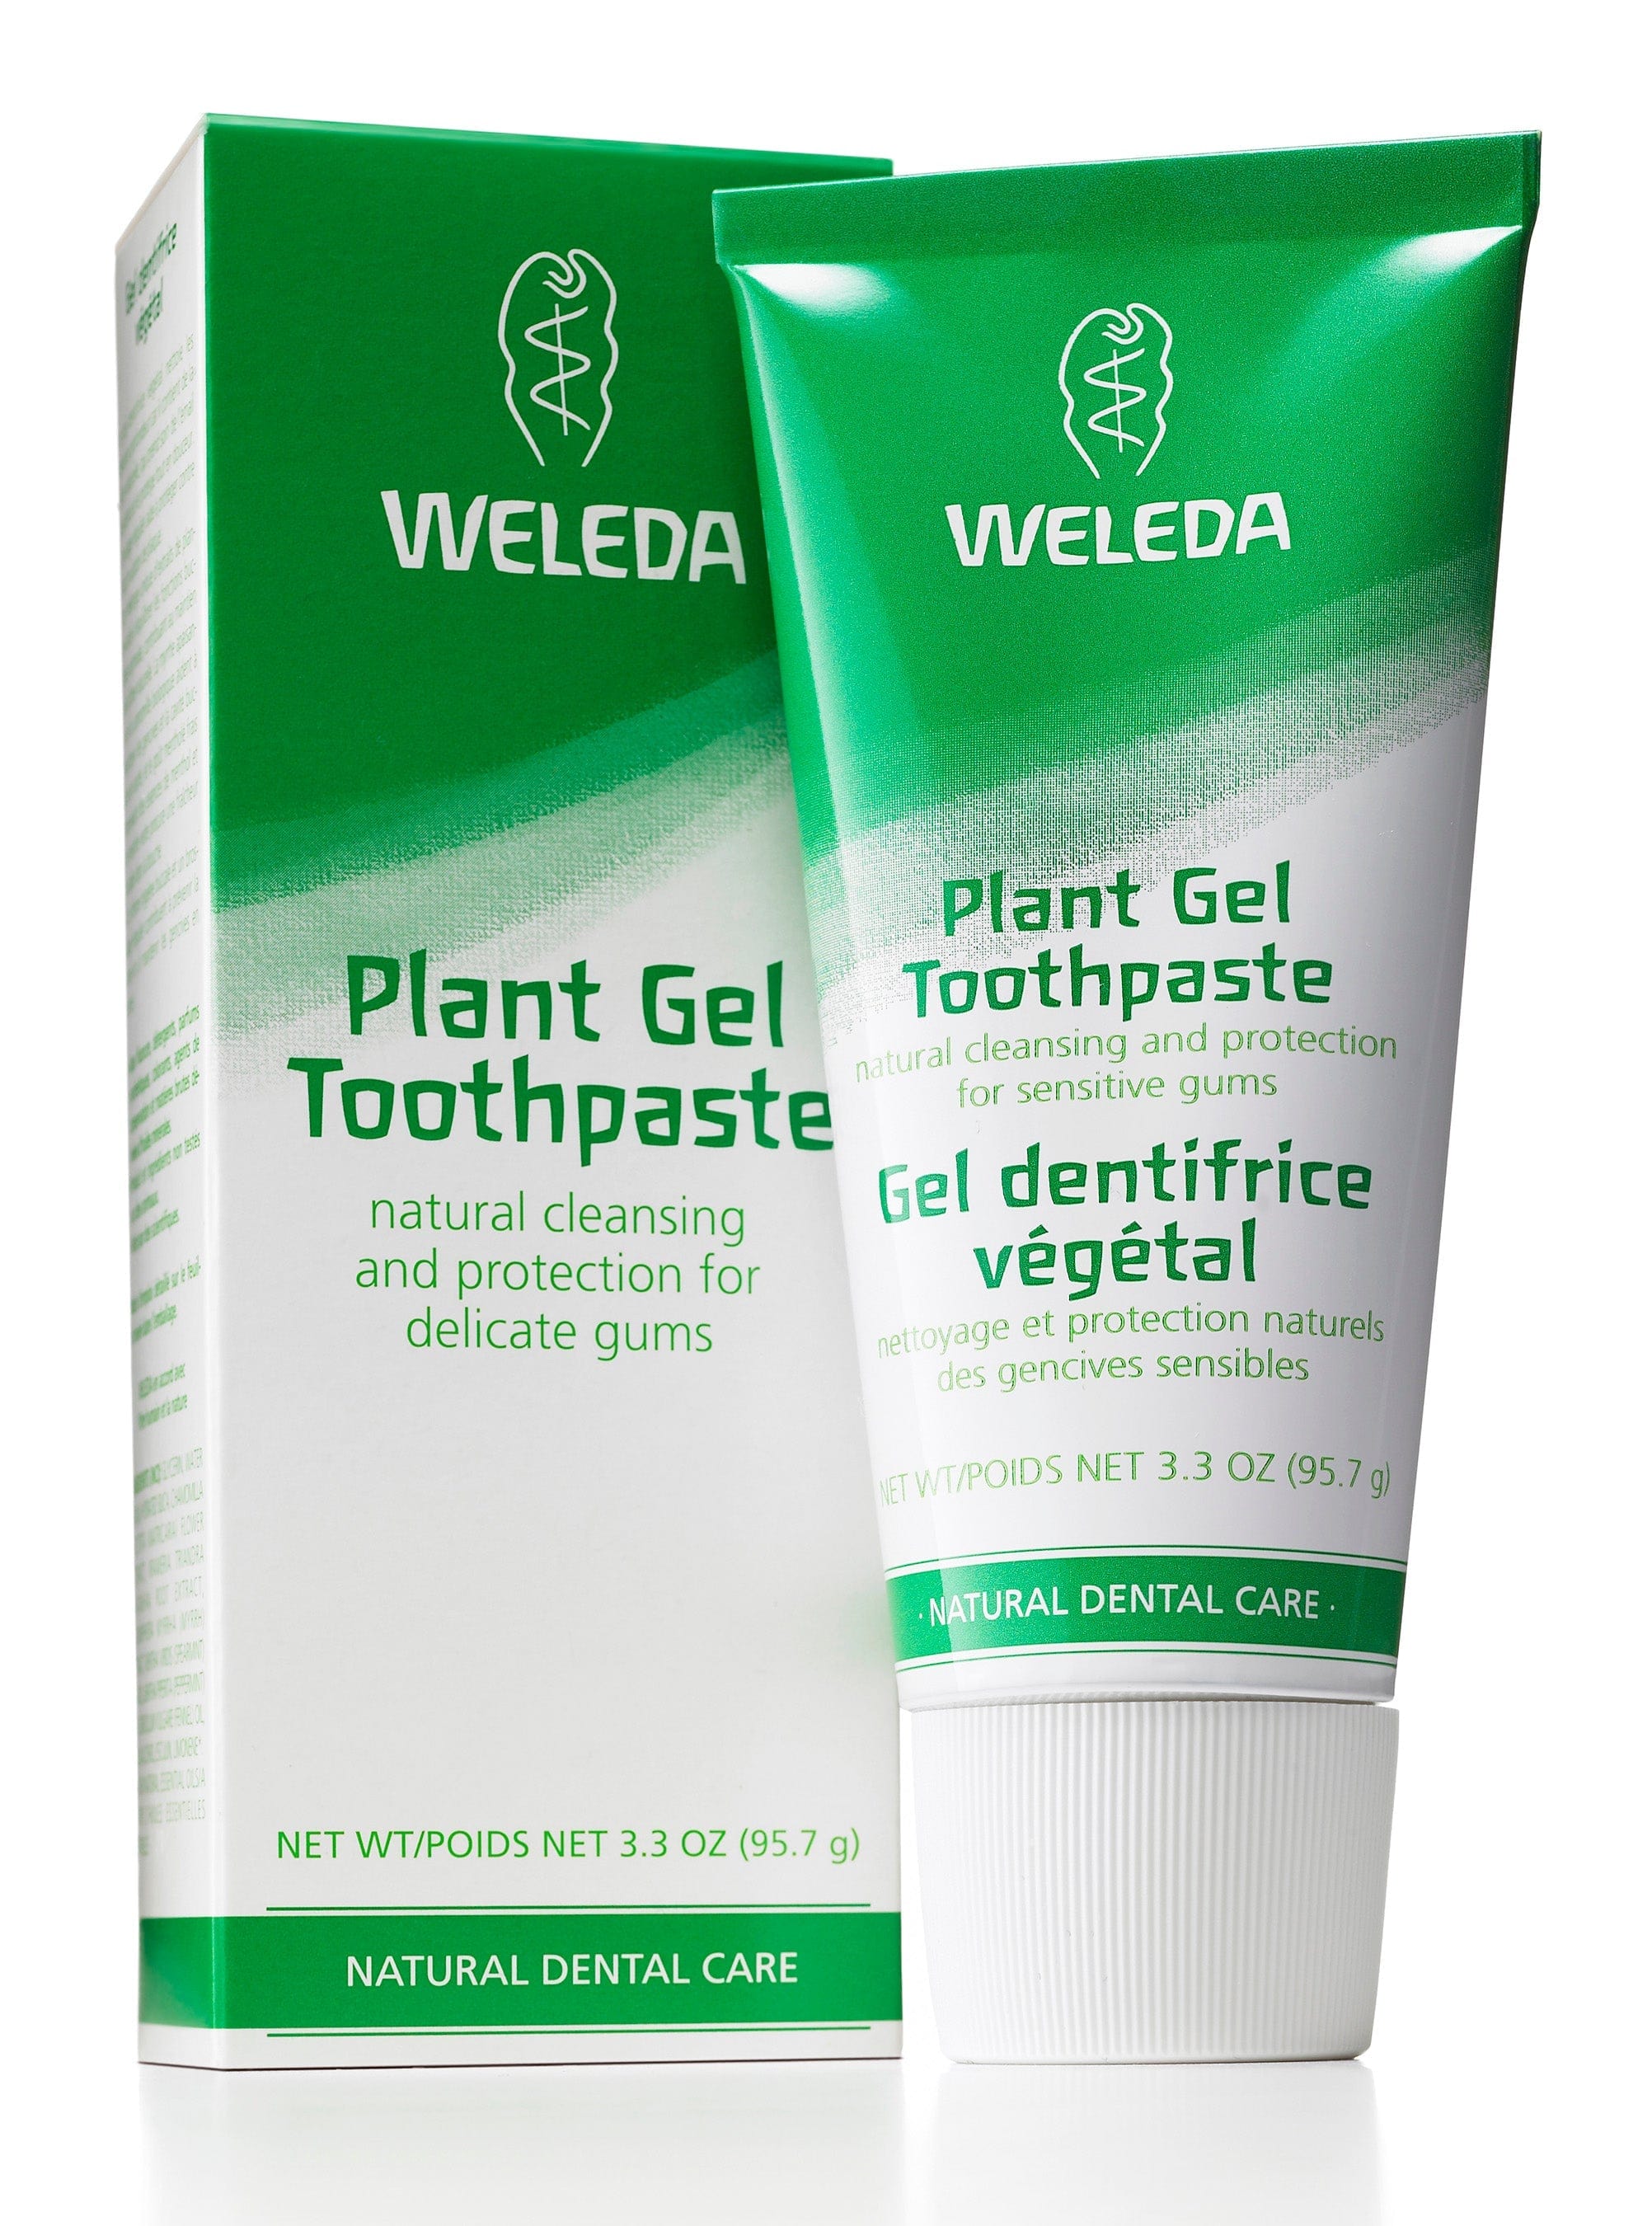 WELEDA Soins & Beauté Dentifrice gel végétal 97.5g